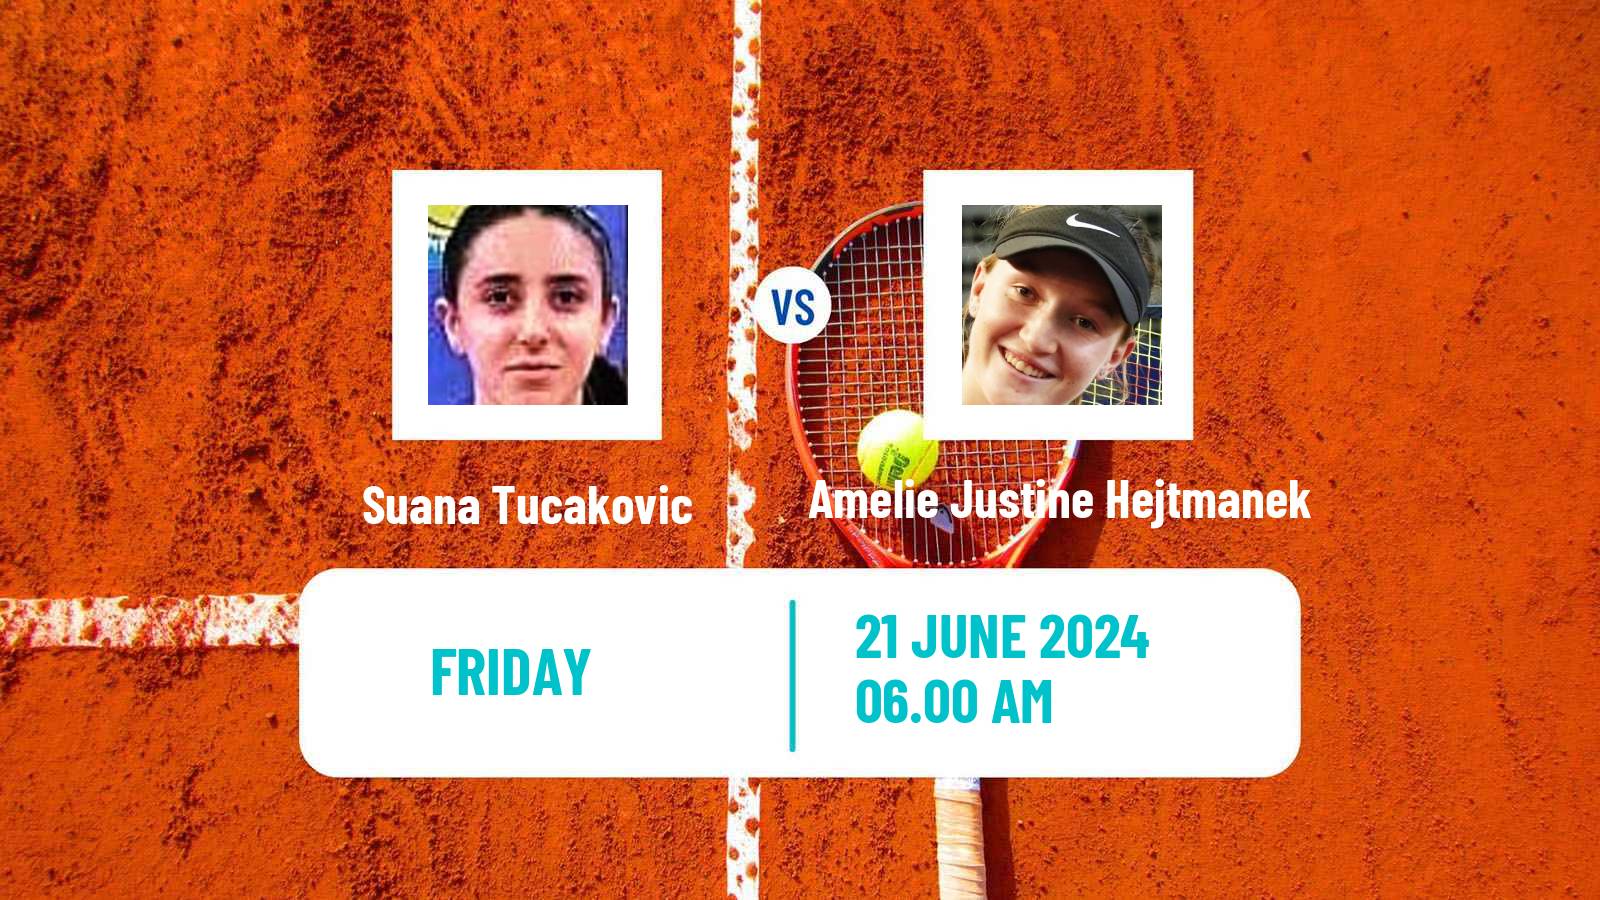 Tennis ITF W15 Kursumlijska Banja 8 Women Suana Tucakovic - Amelie Justine Hejtmanek